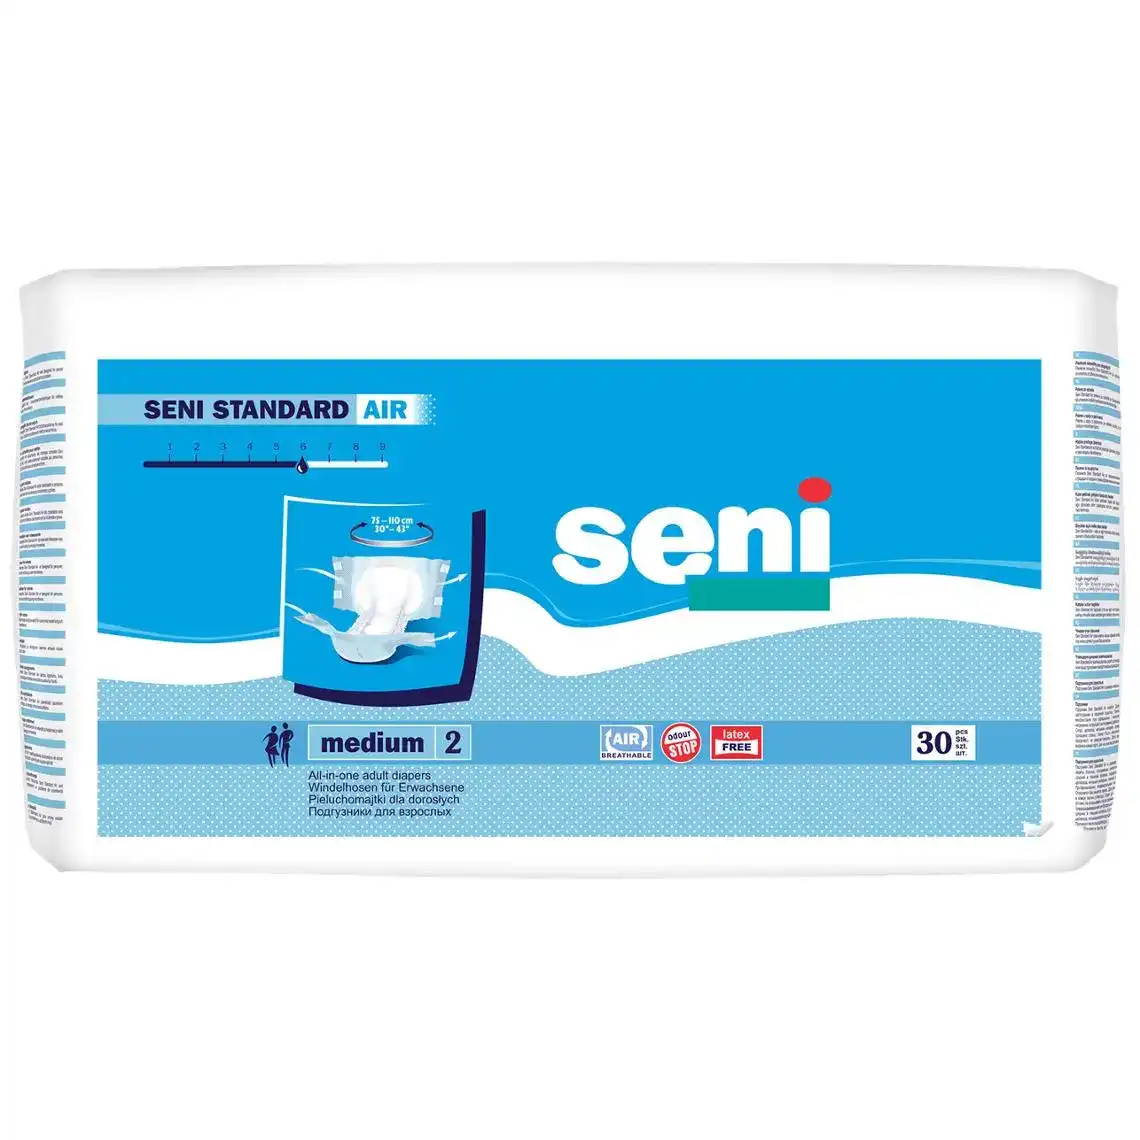 Підгузники Seni Standart Air medium для дорослих 30 шт.